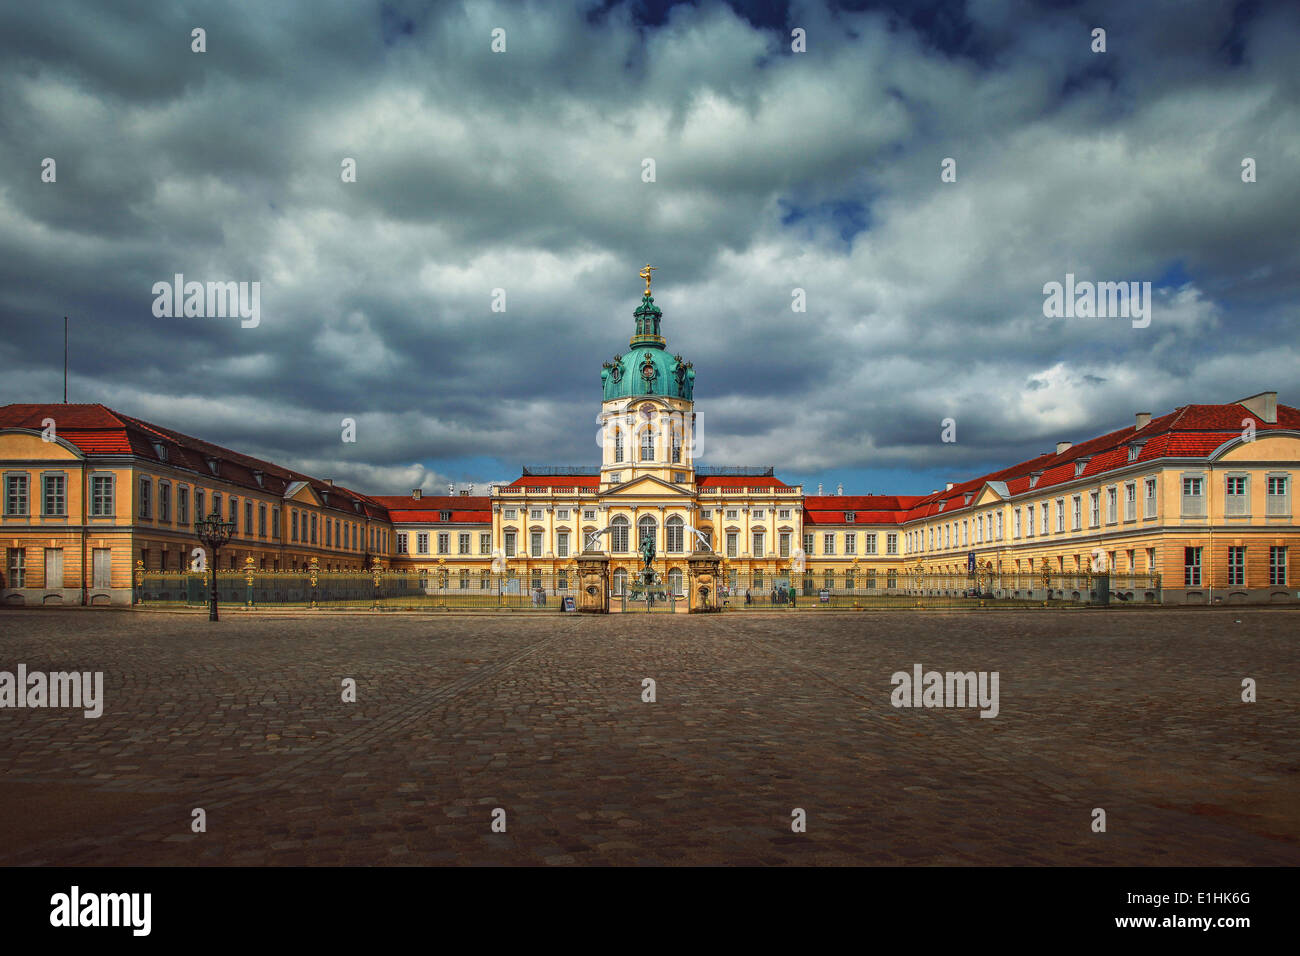 Schloss Charlottenburg Palace, Berlin, Germany Stock Photo